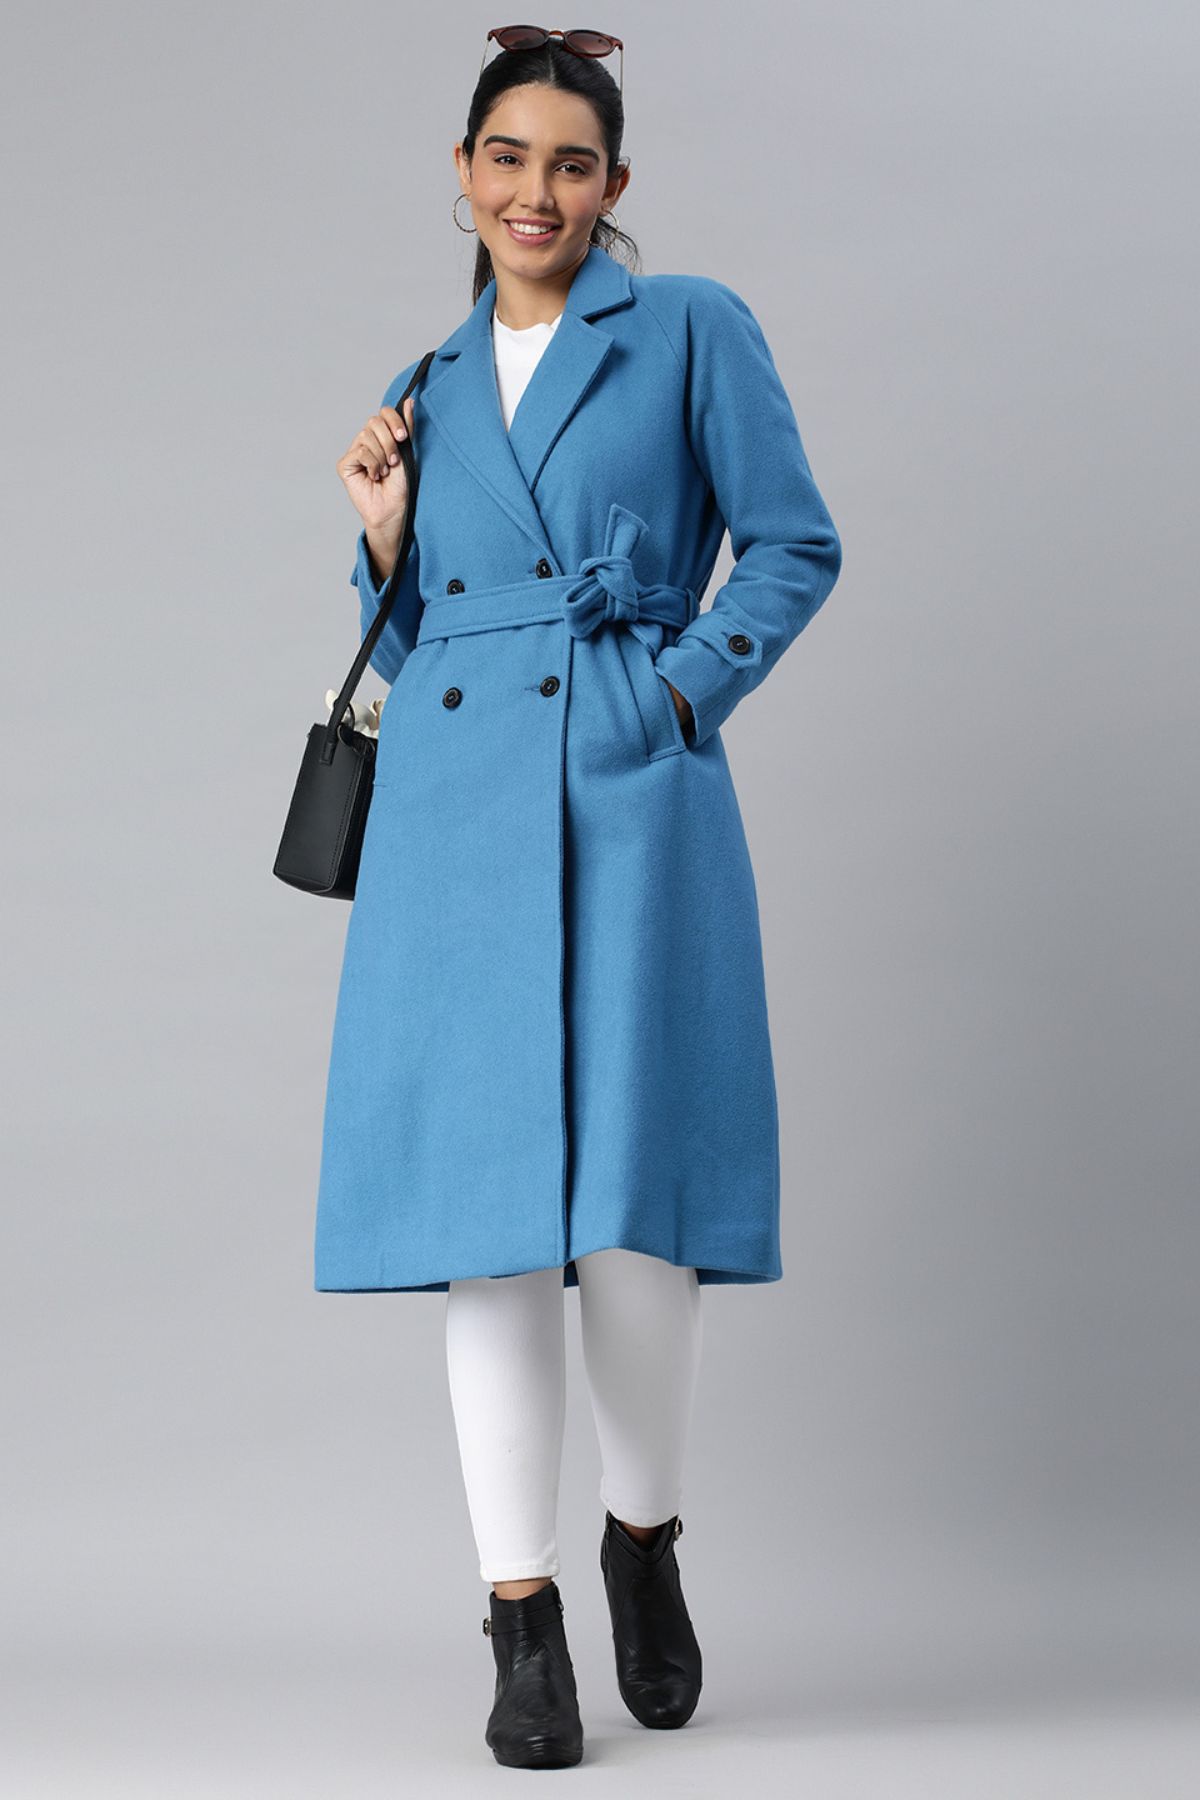 Buy Bernard Classic Denim Jacket for Women Online in India on a la mode-nextbuild.com.vn